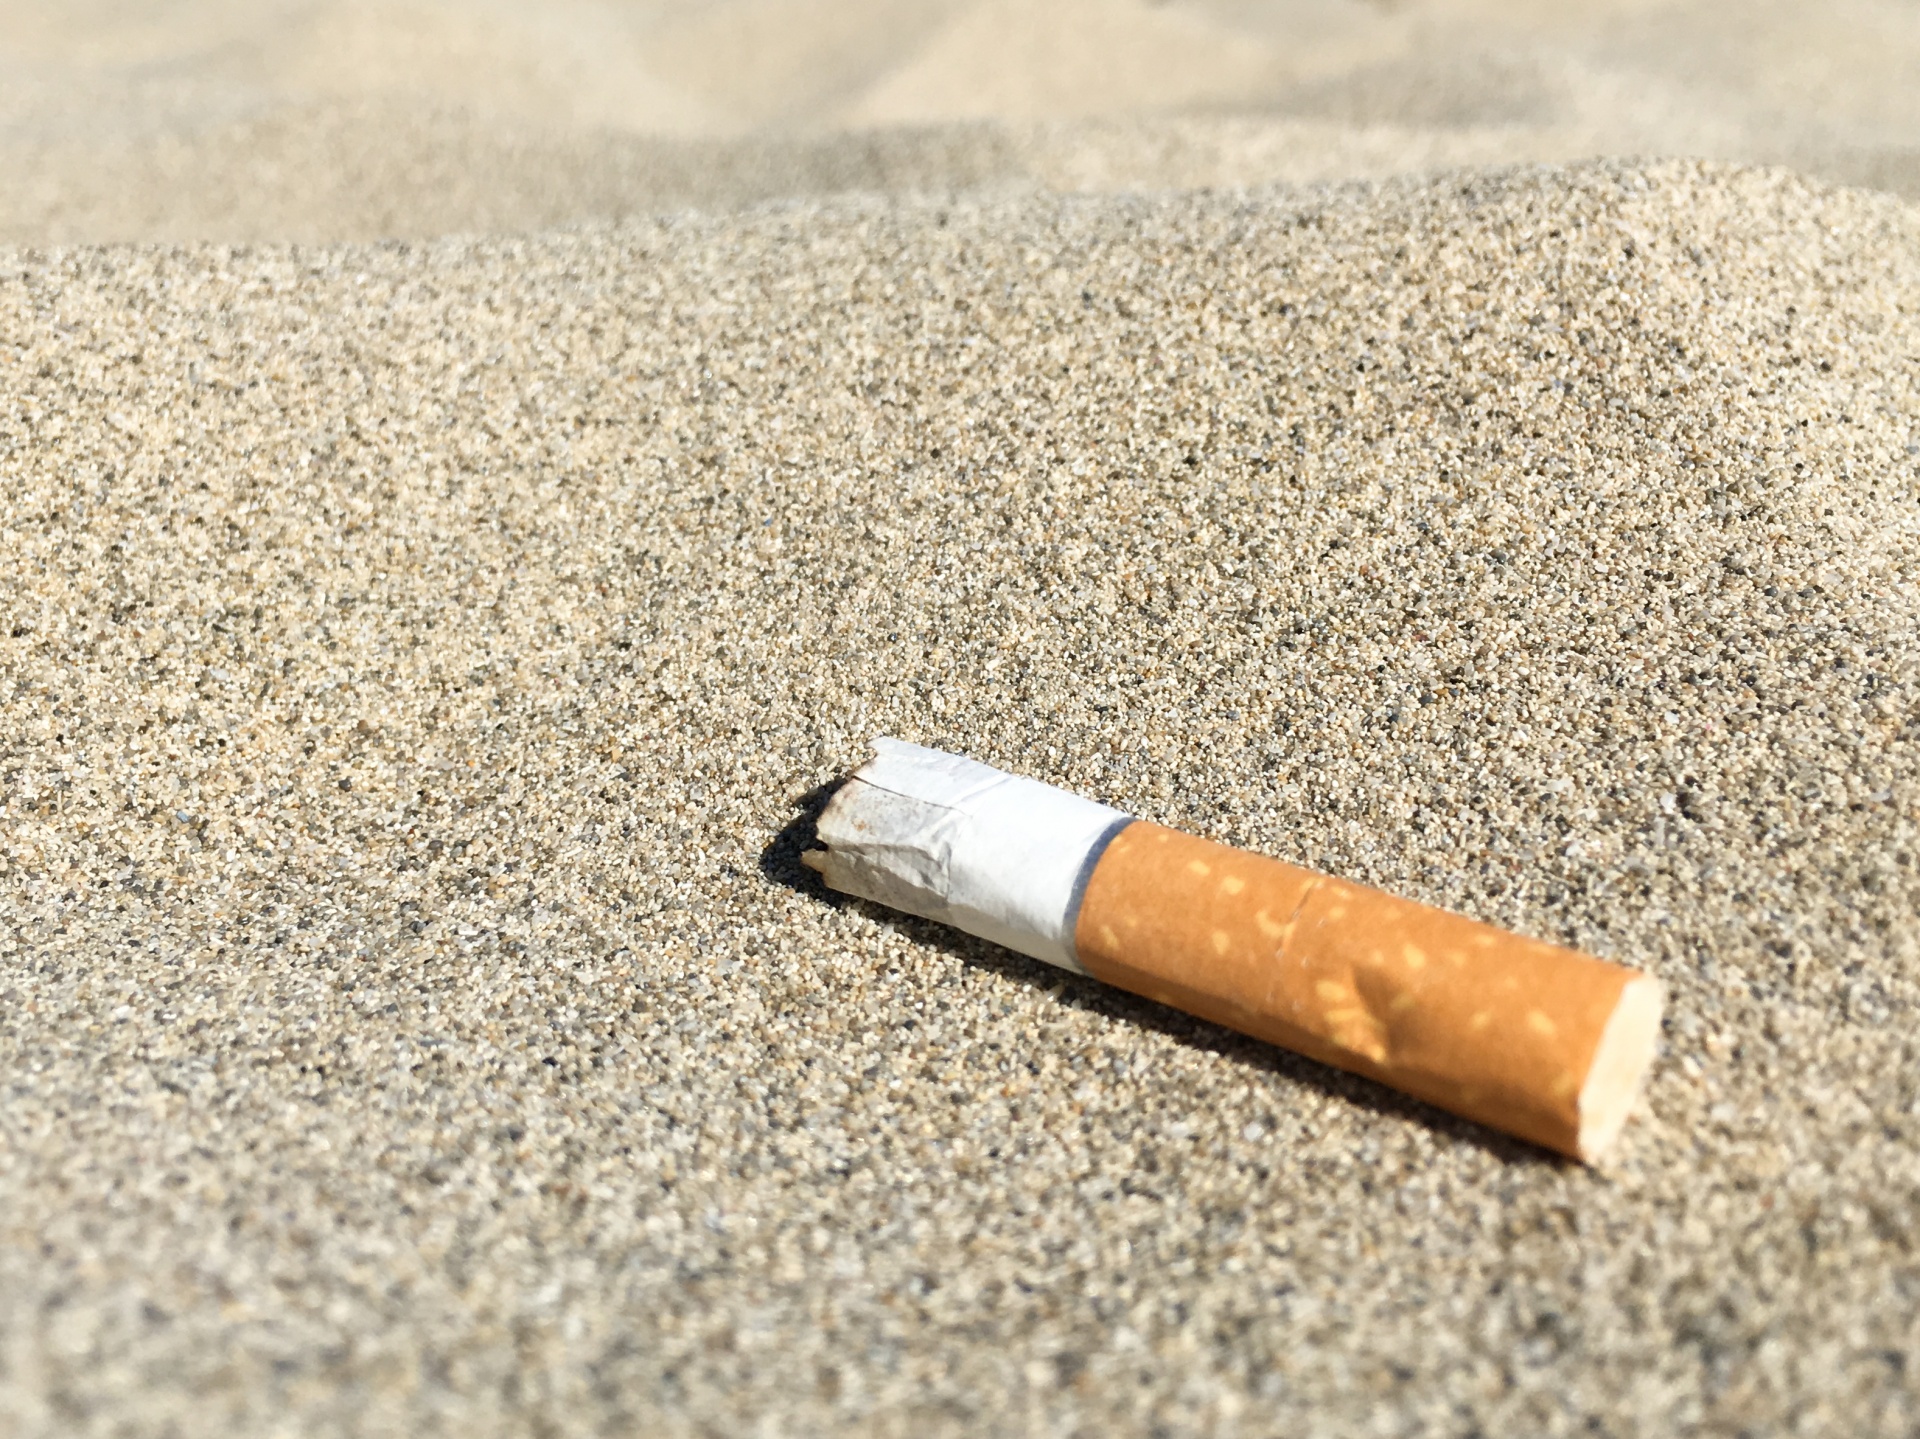 Cigarette Butt In Sand Free Stock Photo - Public Domain Pictures